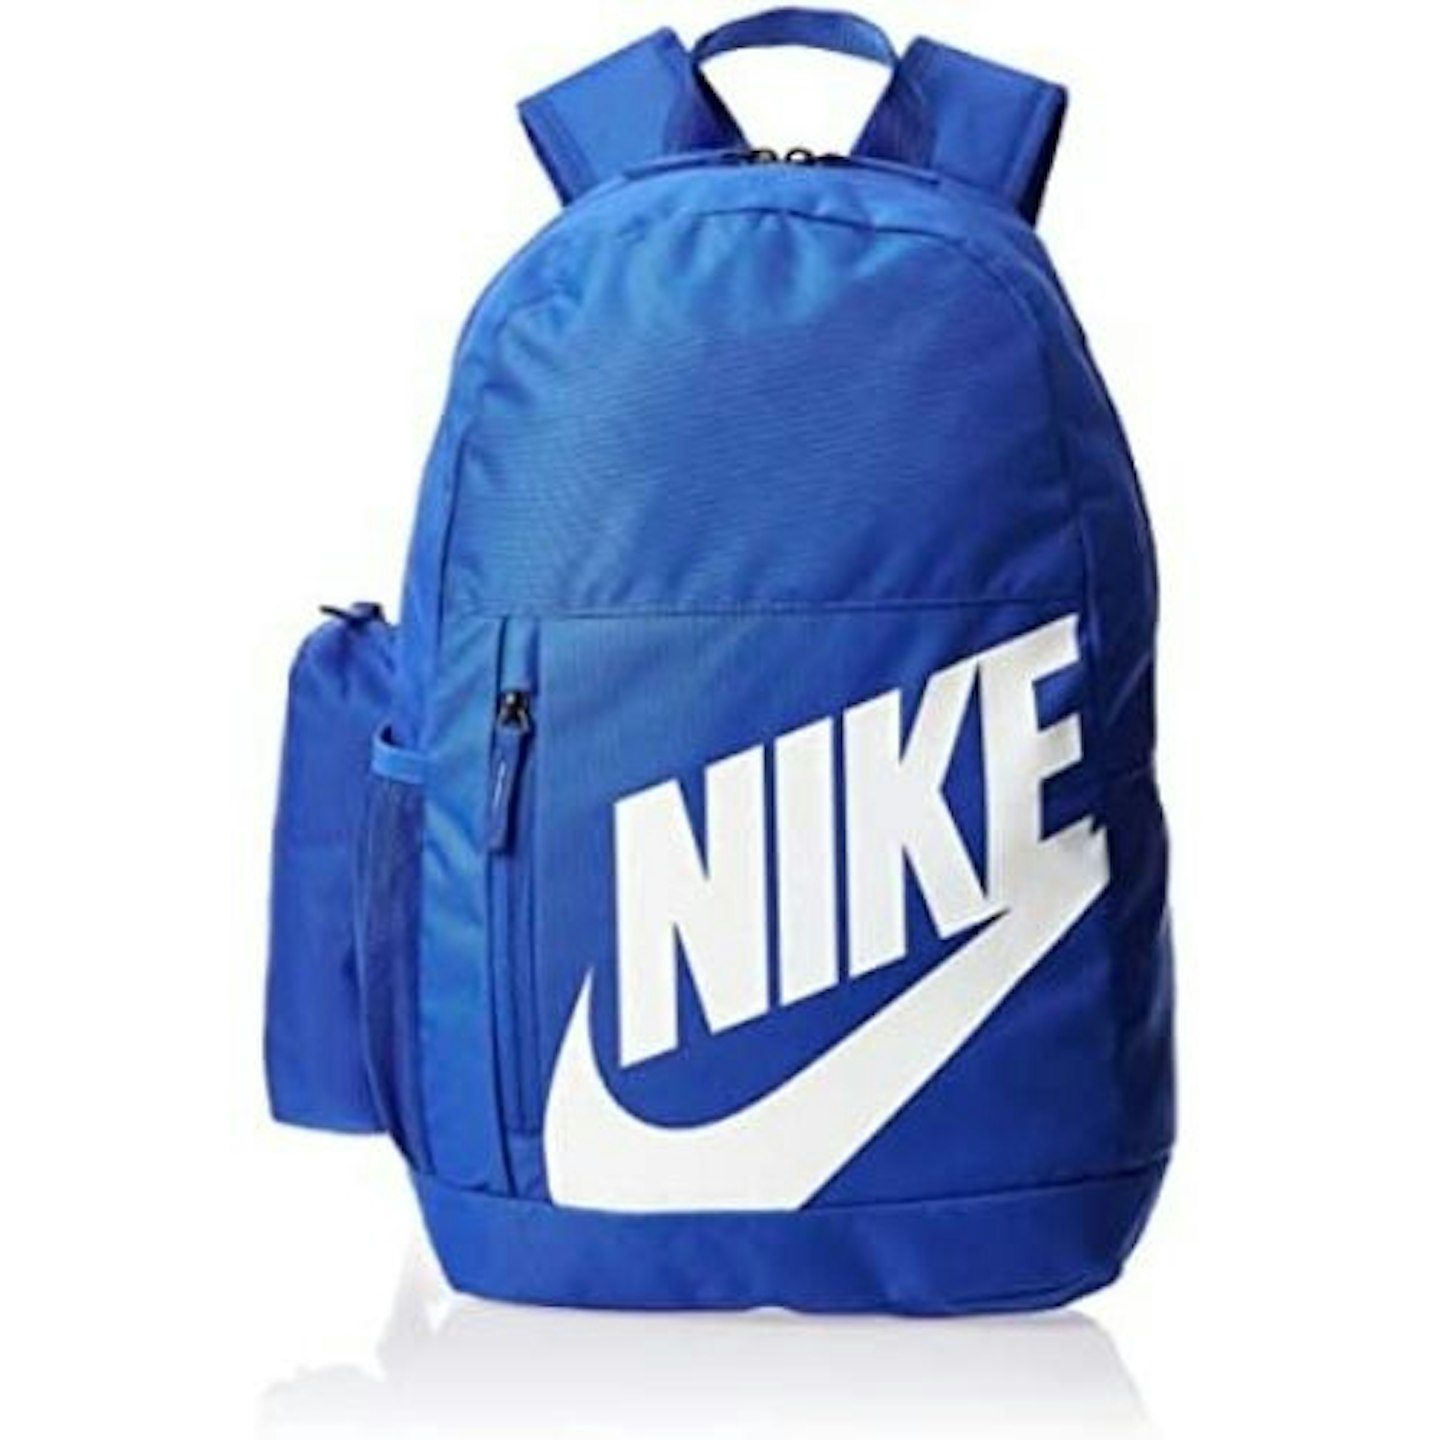 Nike Unisex Kids Youth Nike Elemental Backpack